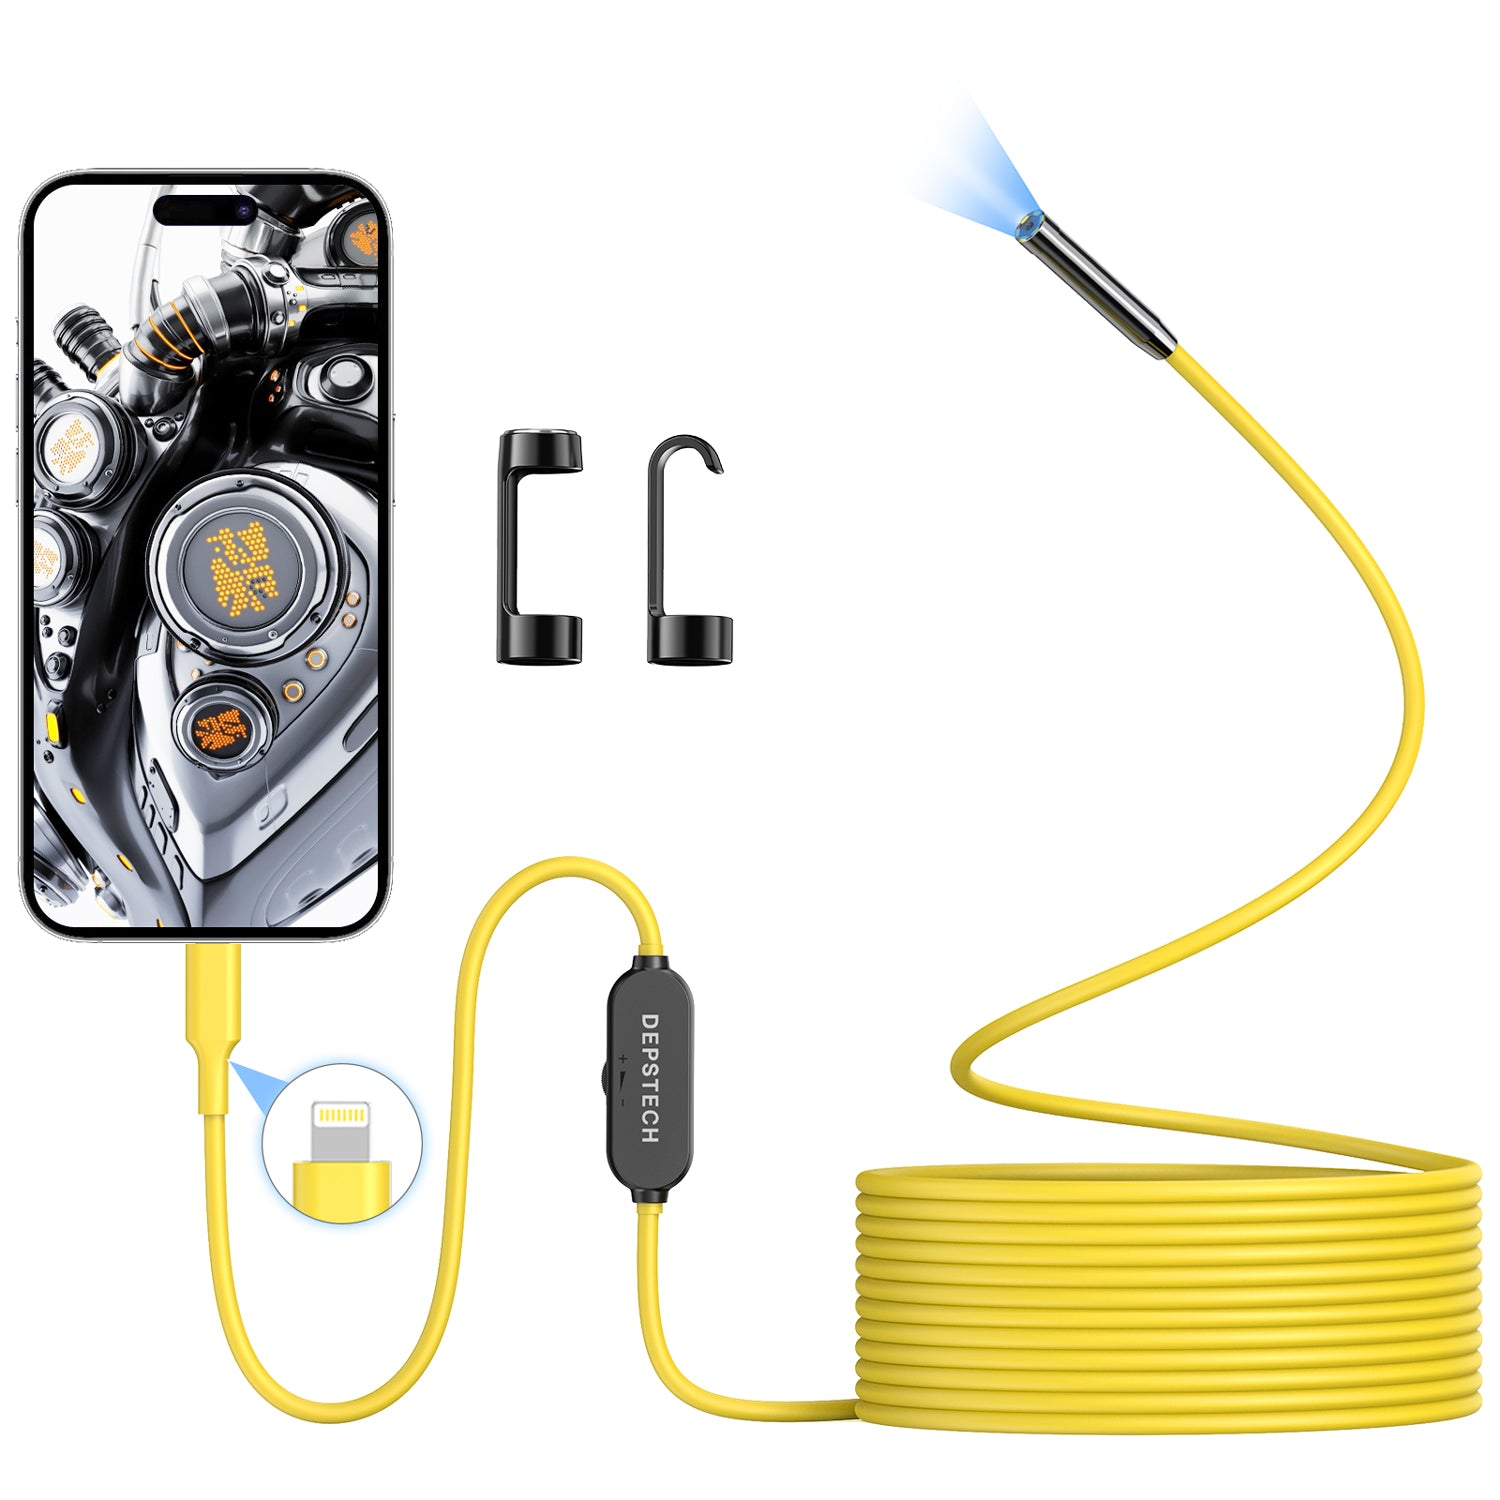 DEPSTECH NTC53 Endoscope Waterproof Snake Camera for iPhone and iPad